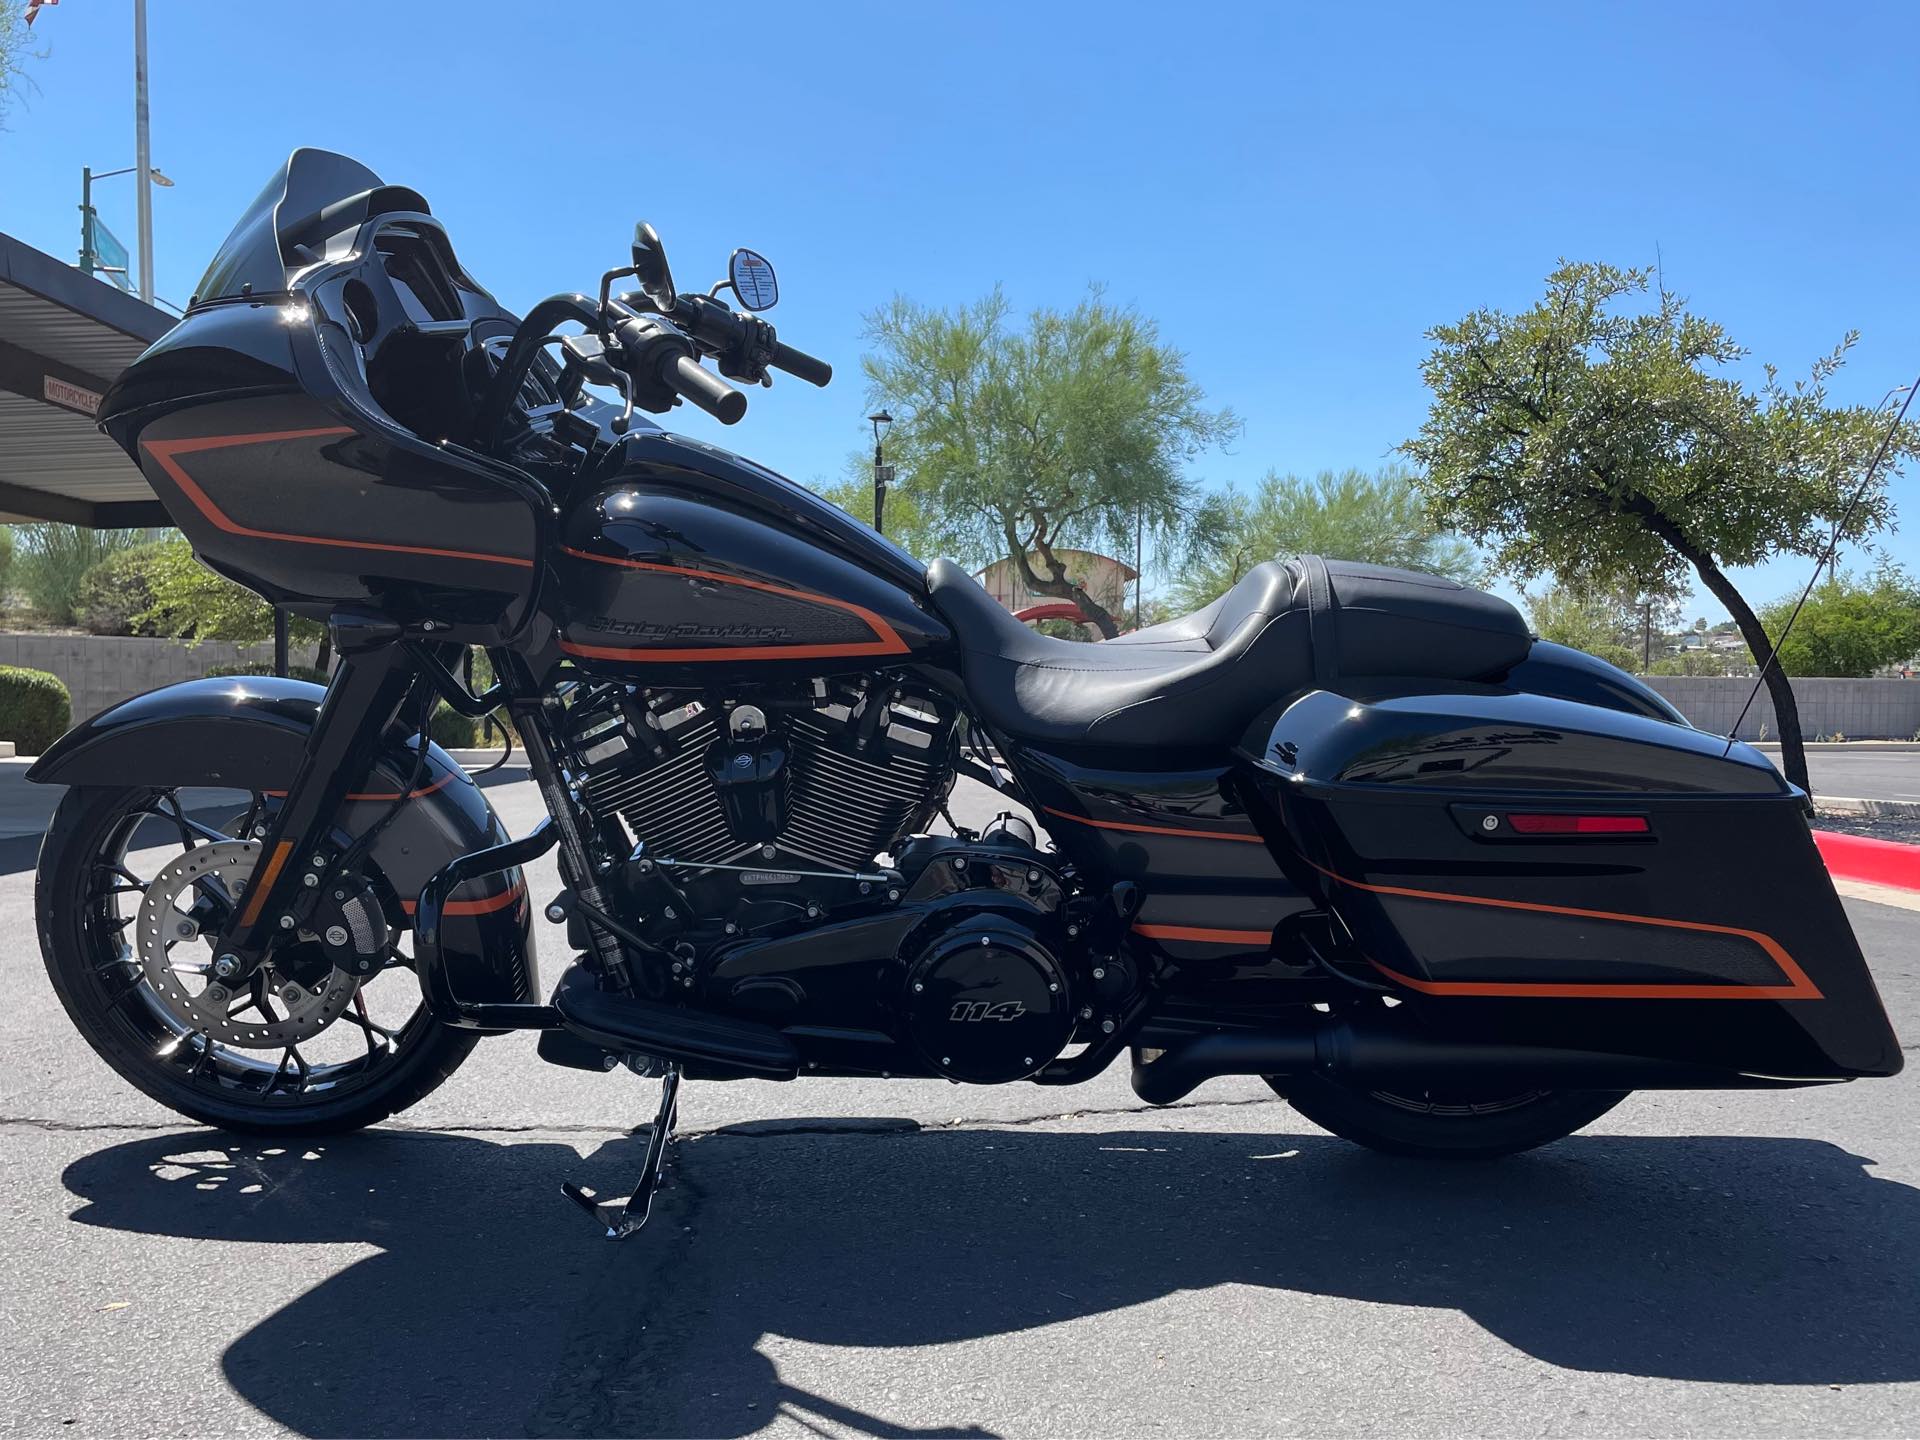 2022 Harley-Davidson Road Glide Special at Buddy Stubbs Arizona Harley-Davidson